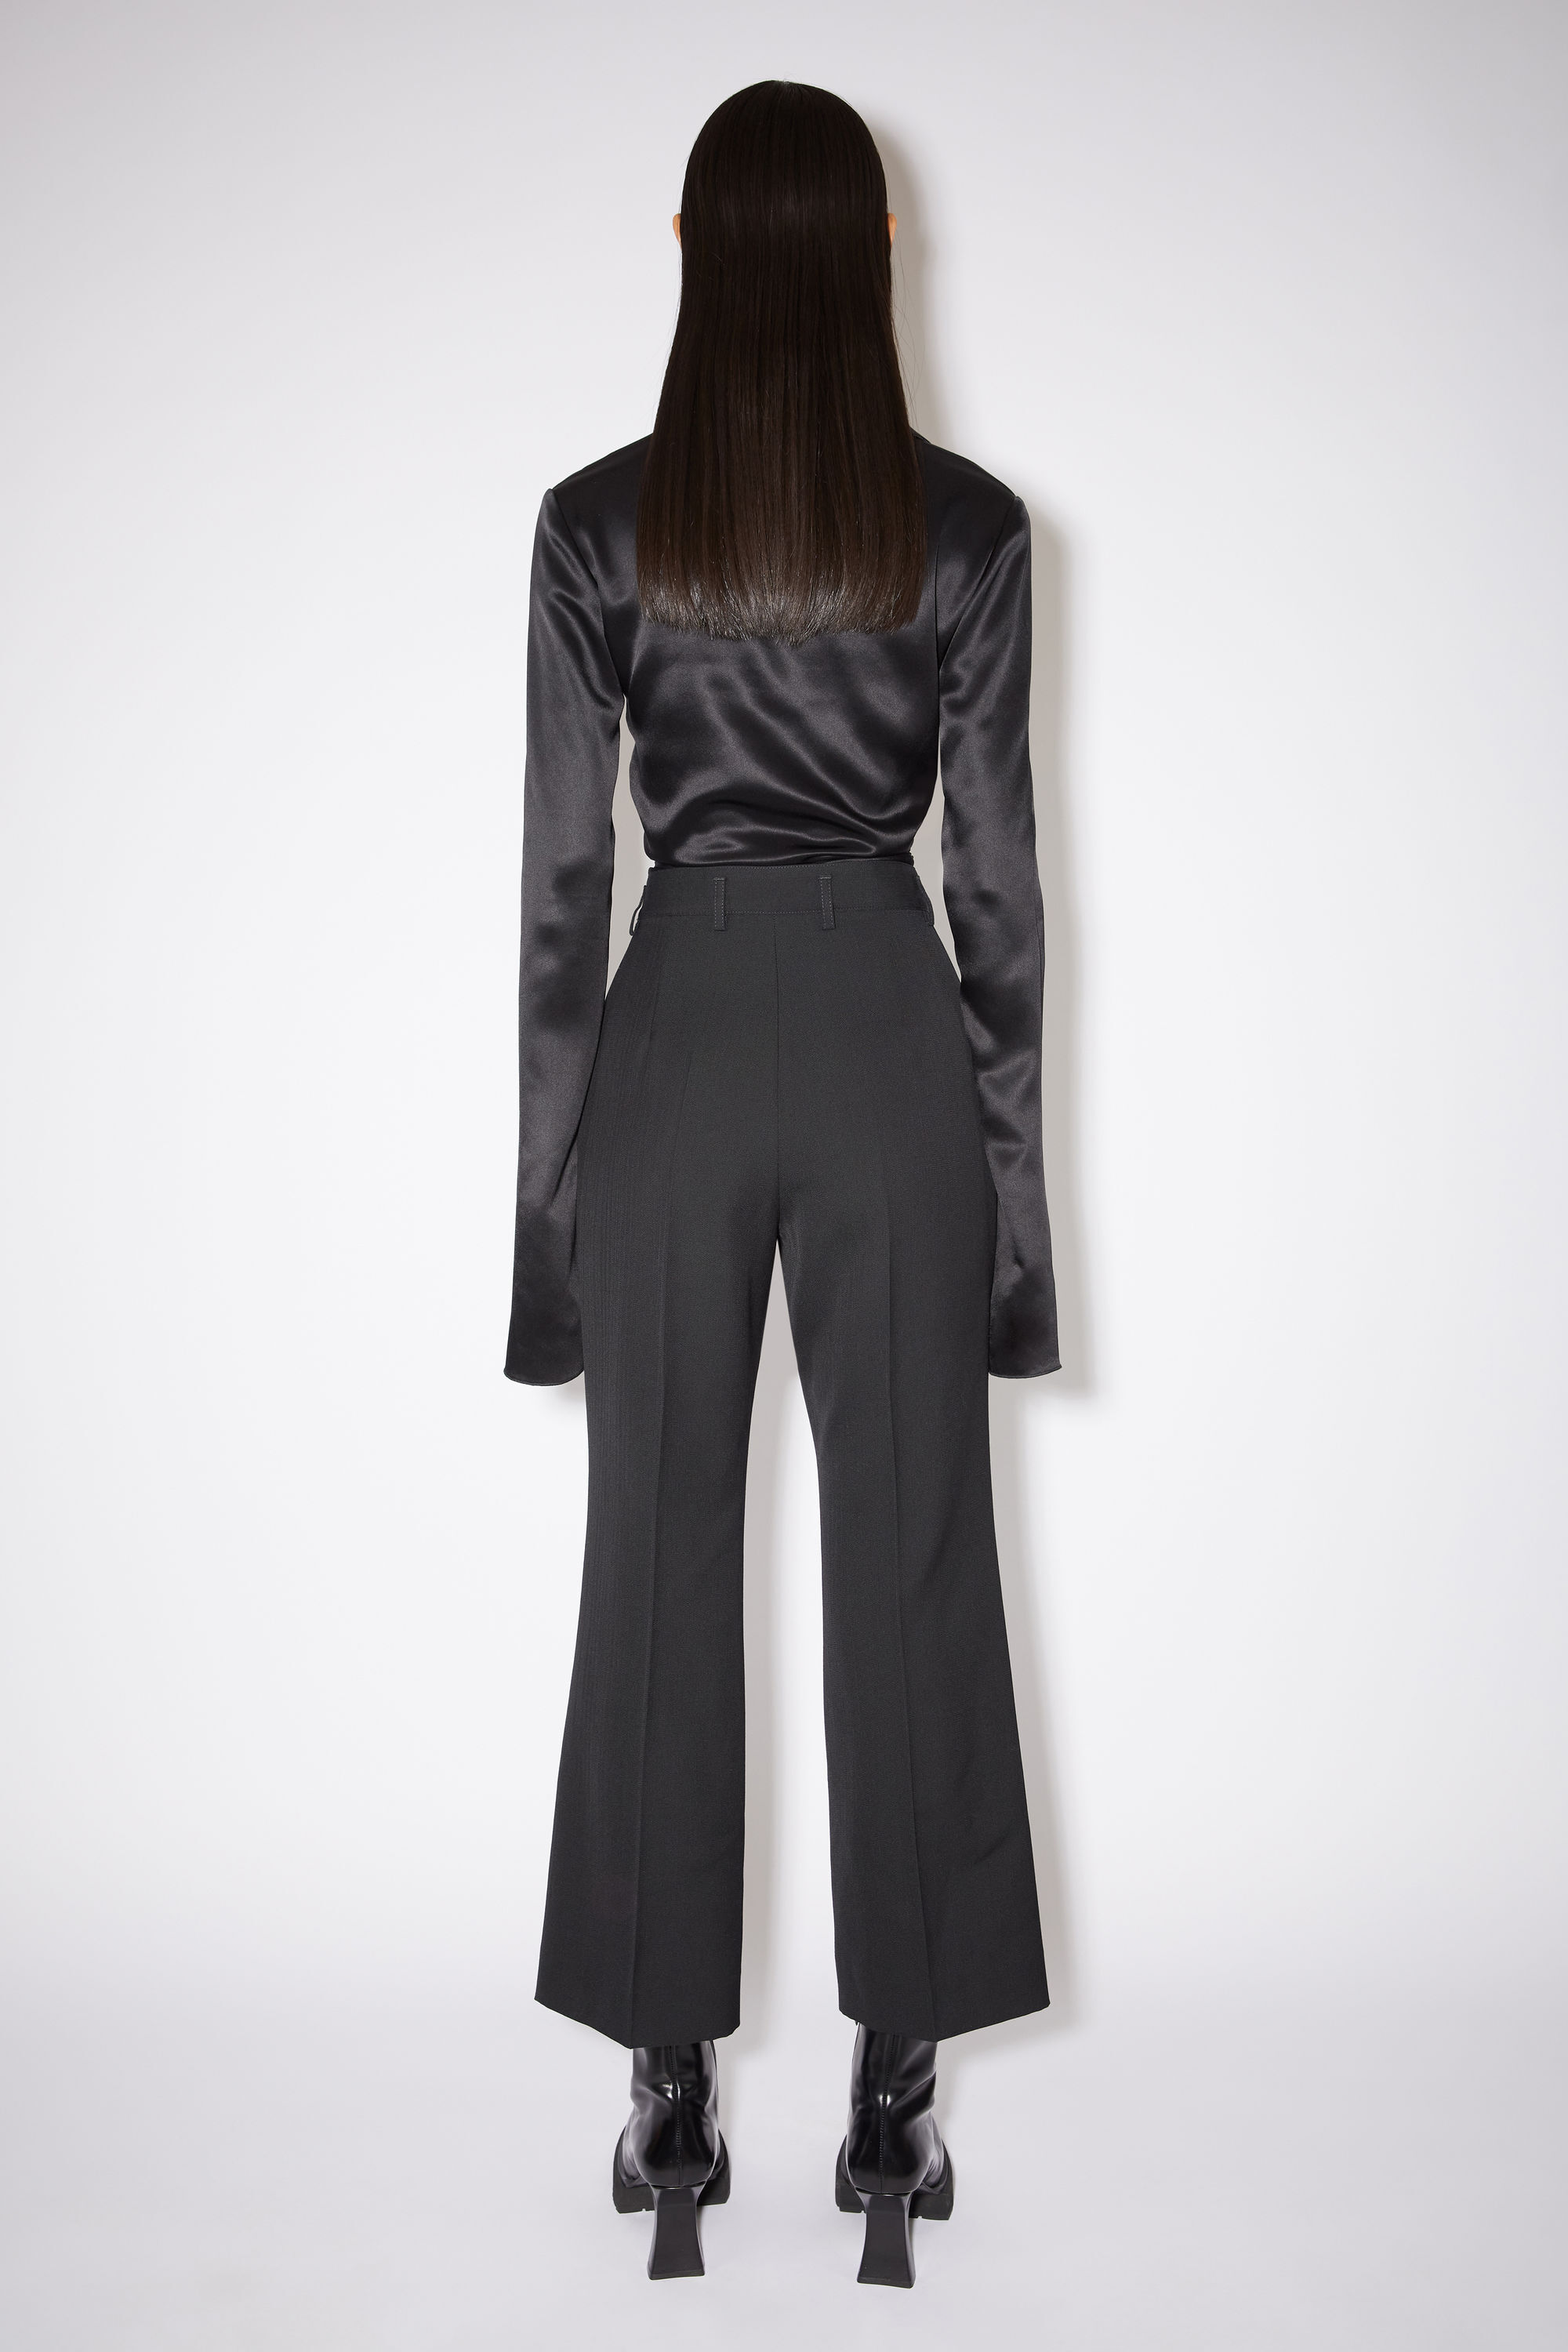 Acne Studios - Tailored trousers - Black